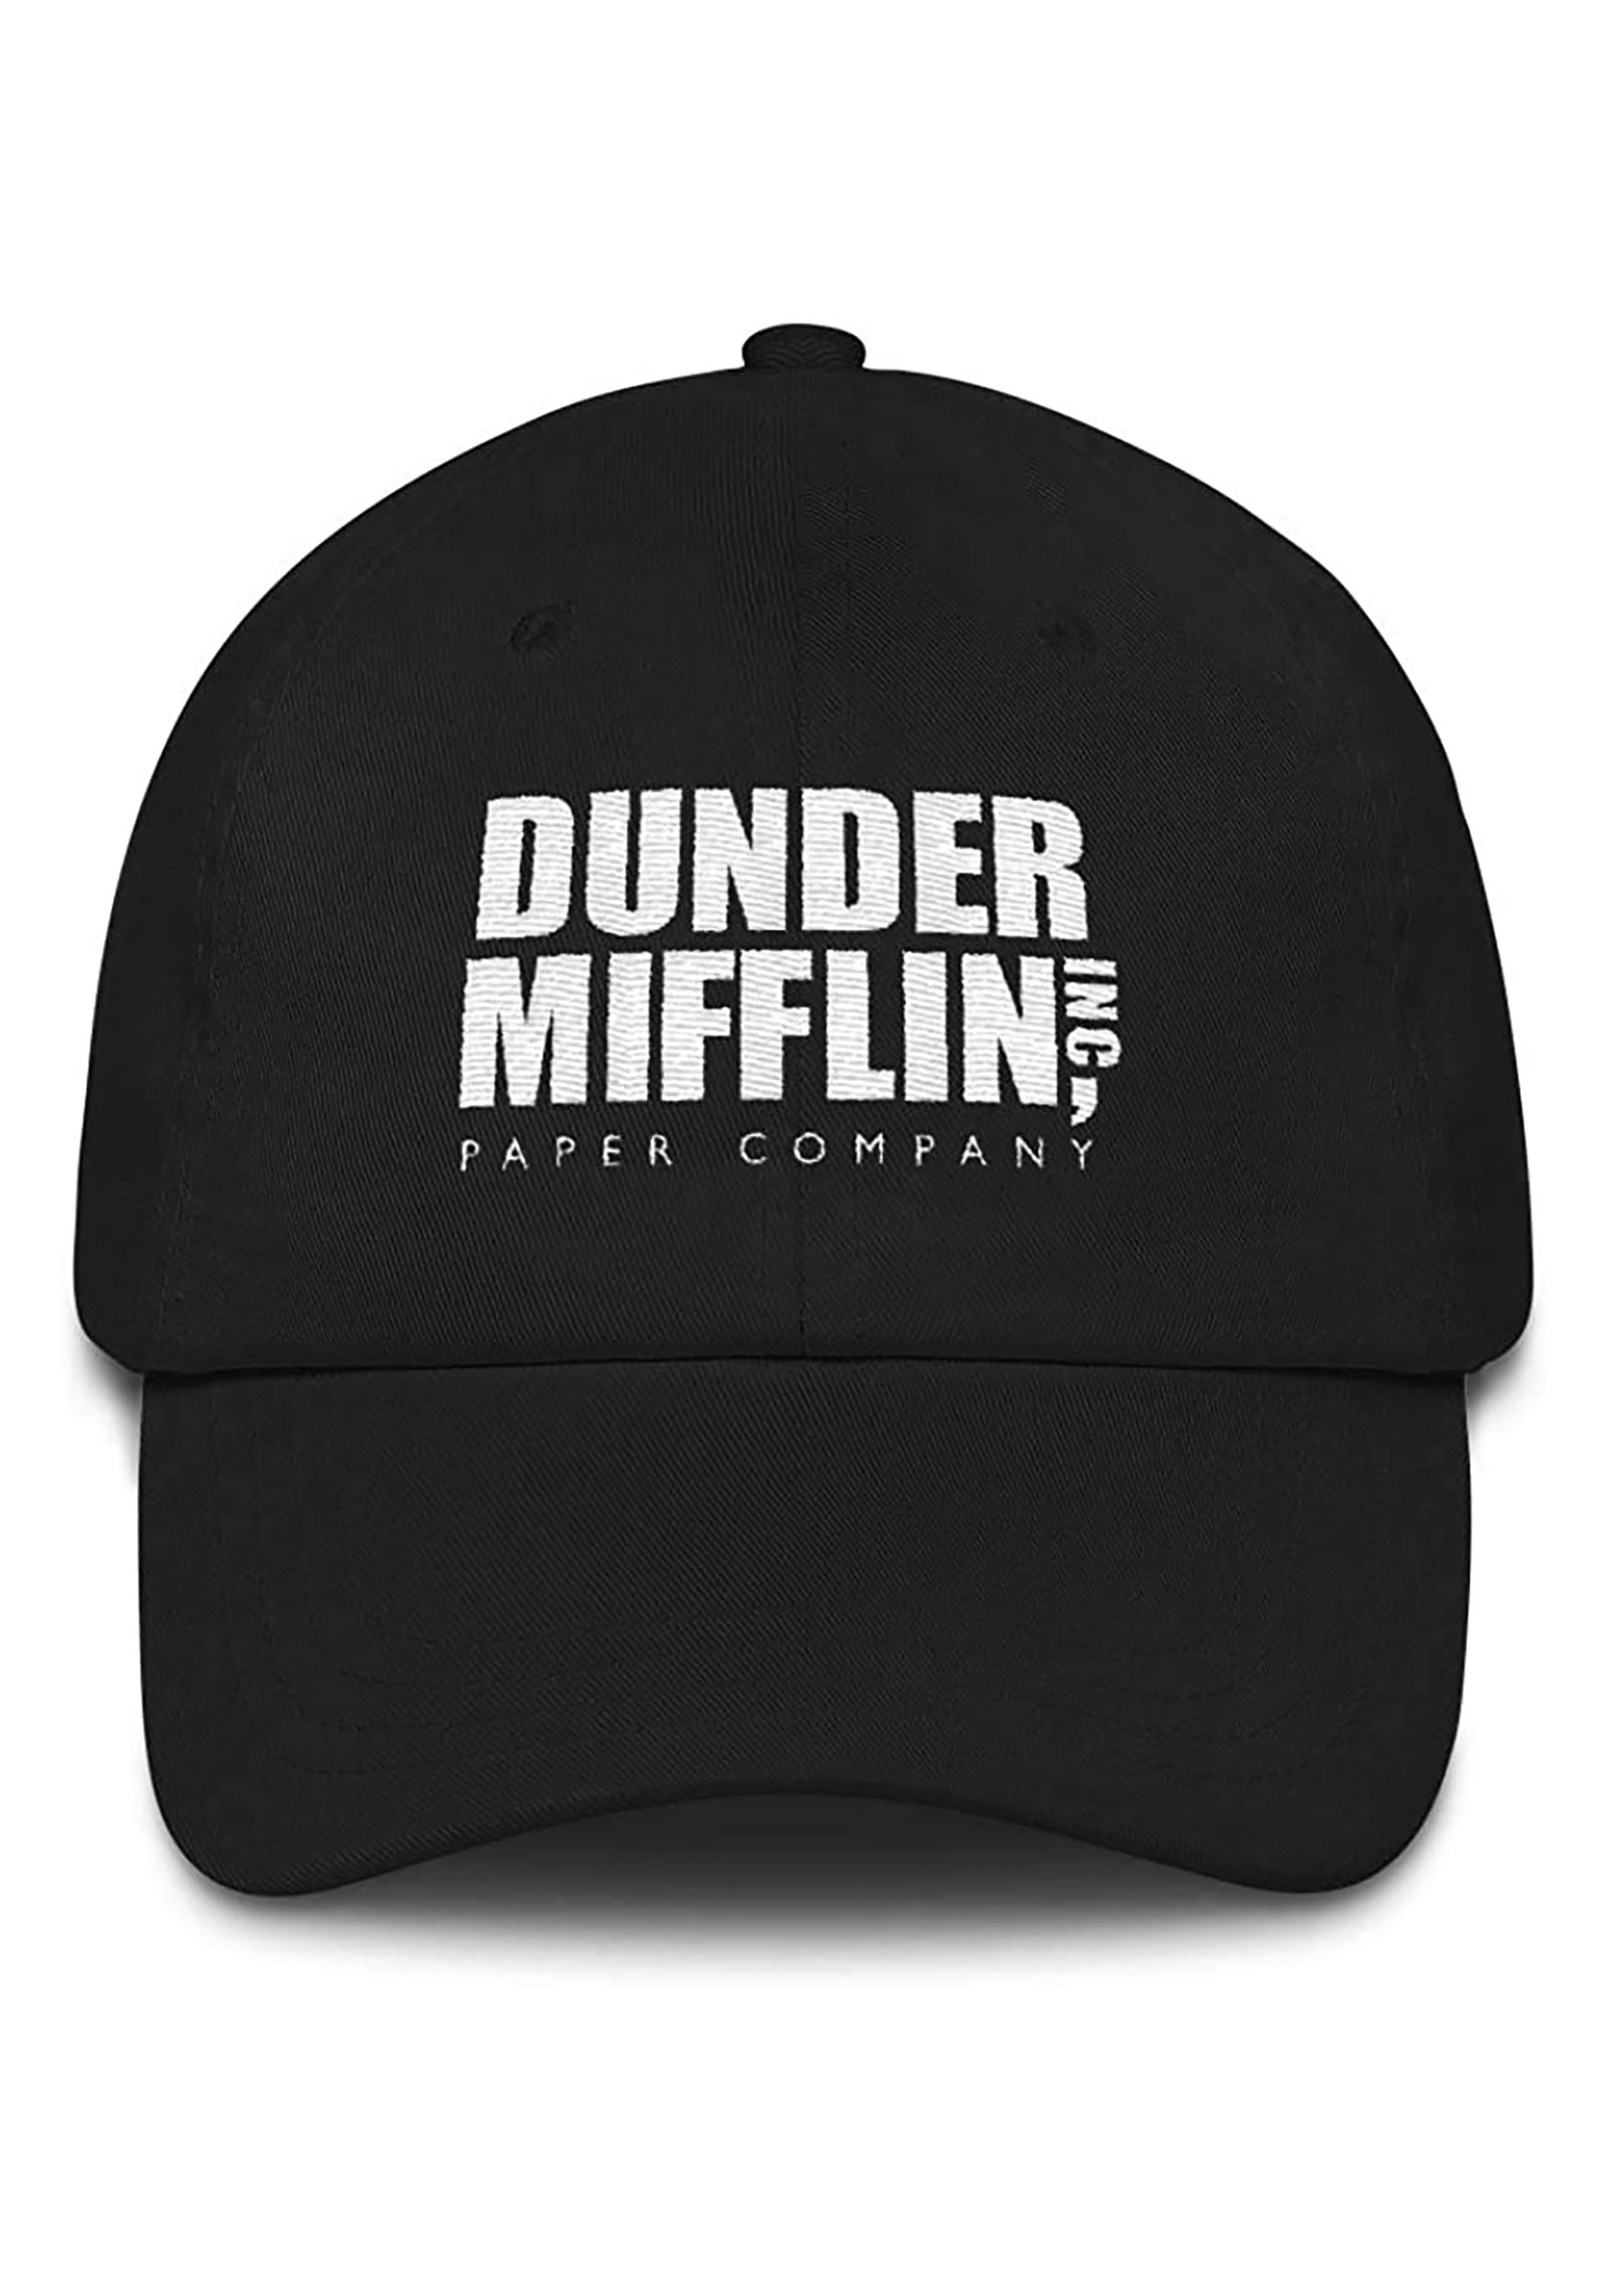 The Office - Dunder Mifflin Black Hat